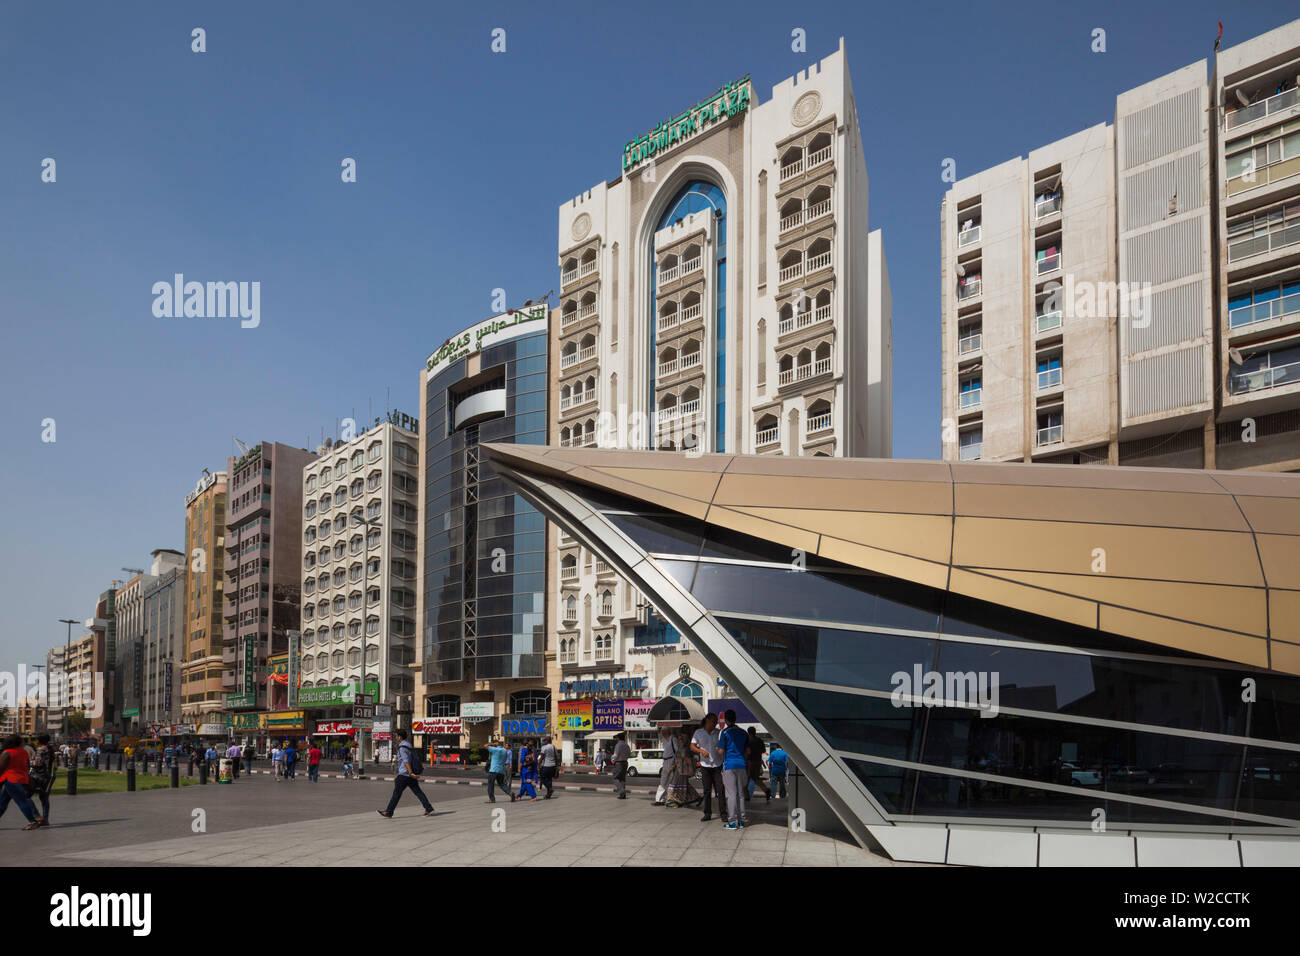 UAE, Dubai, Deira, Baniyas Square Stock Photo